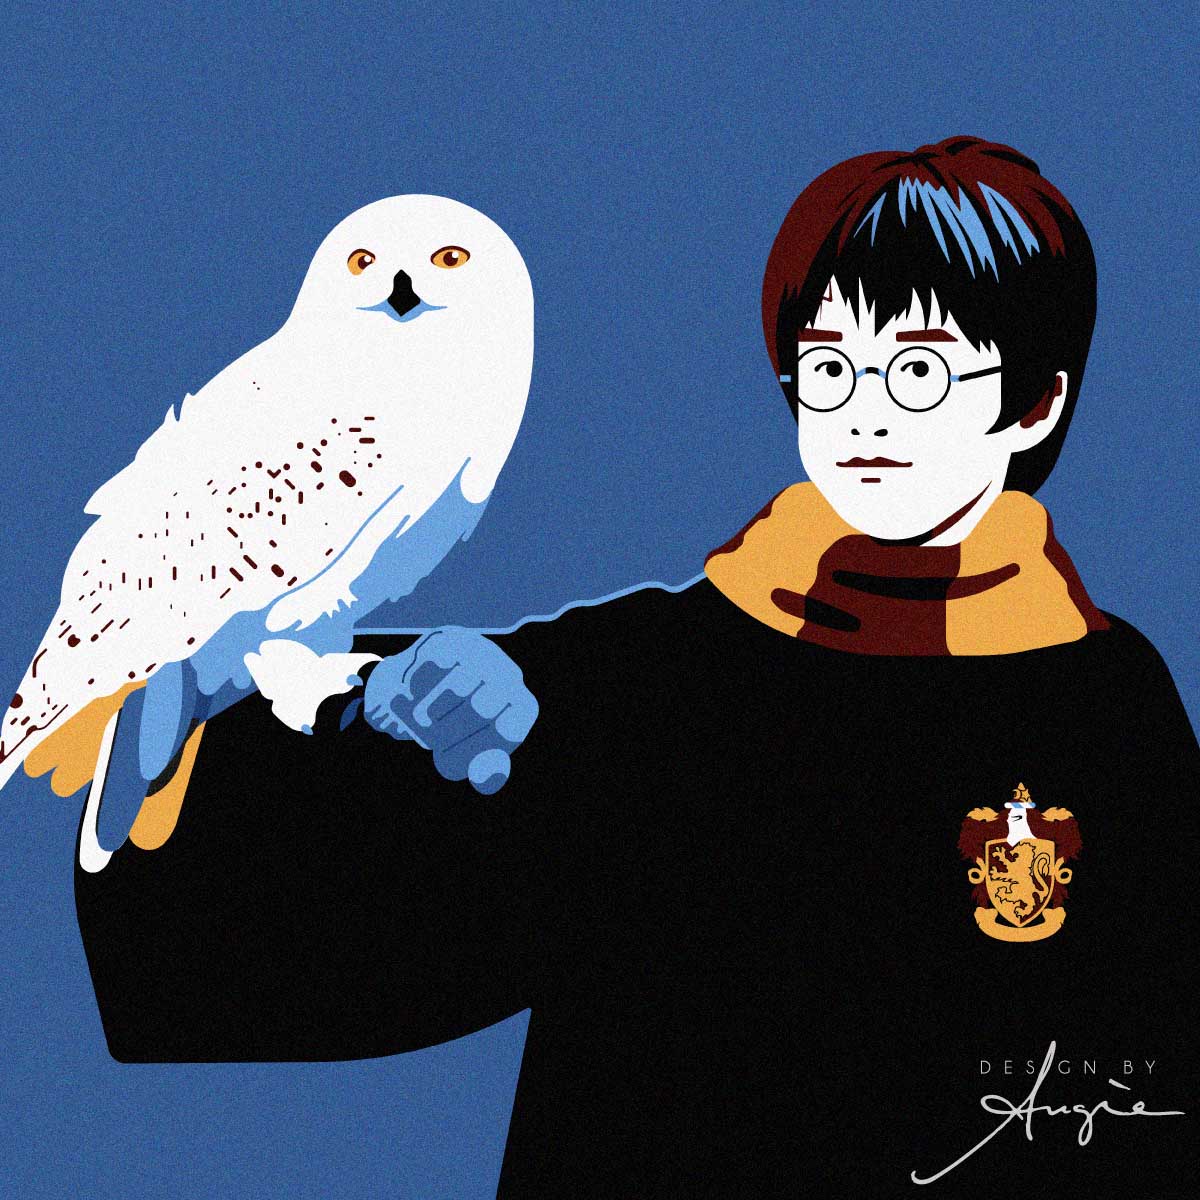 Harry Potter tribute illustration